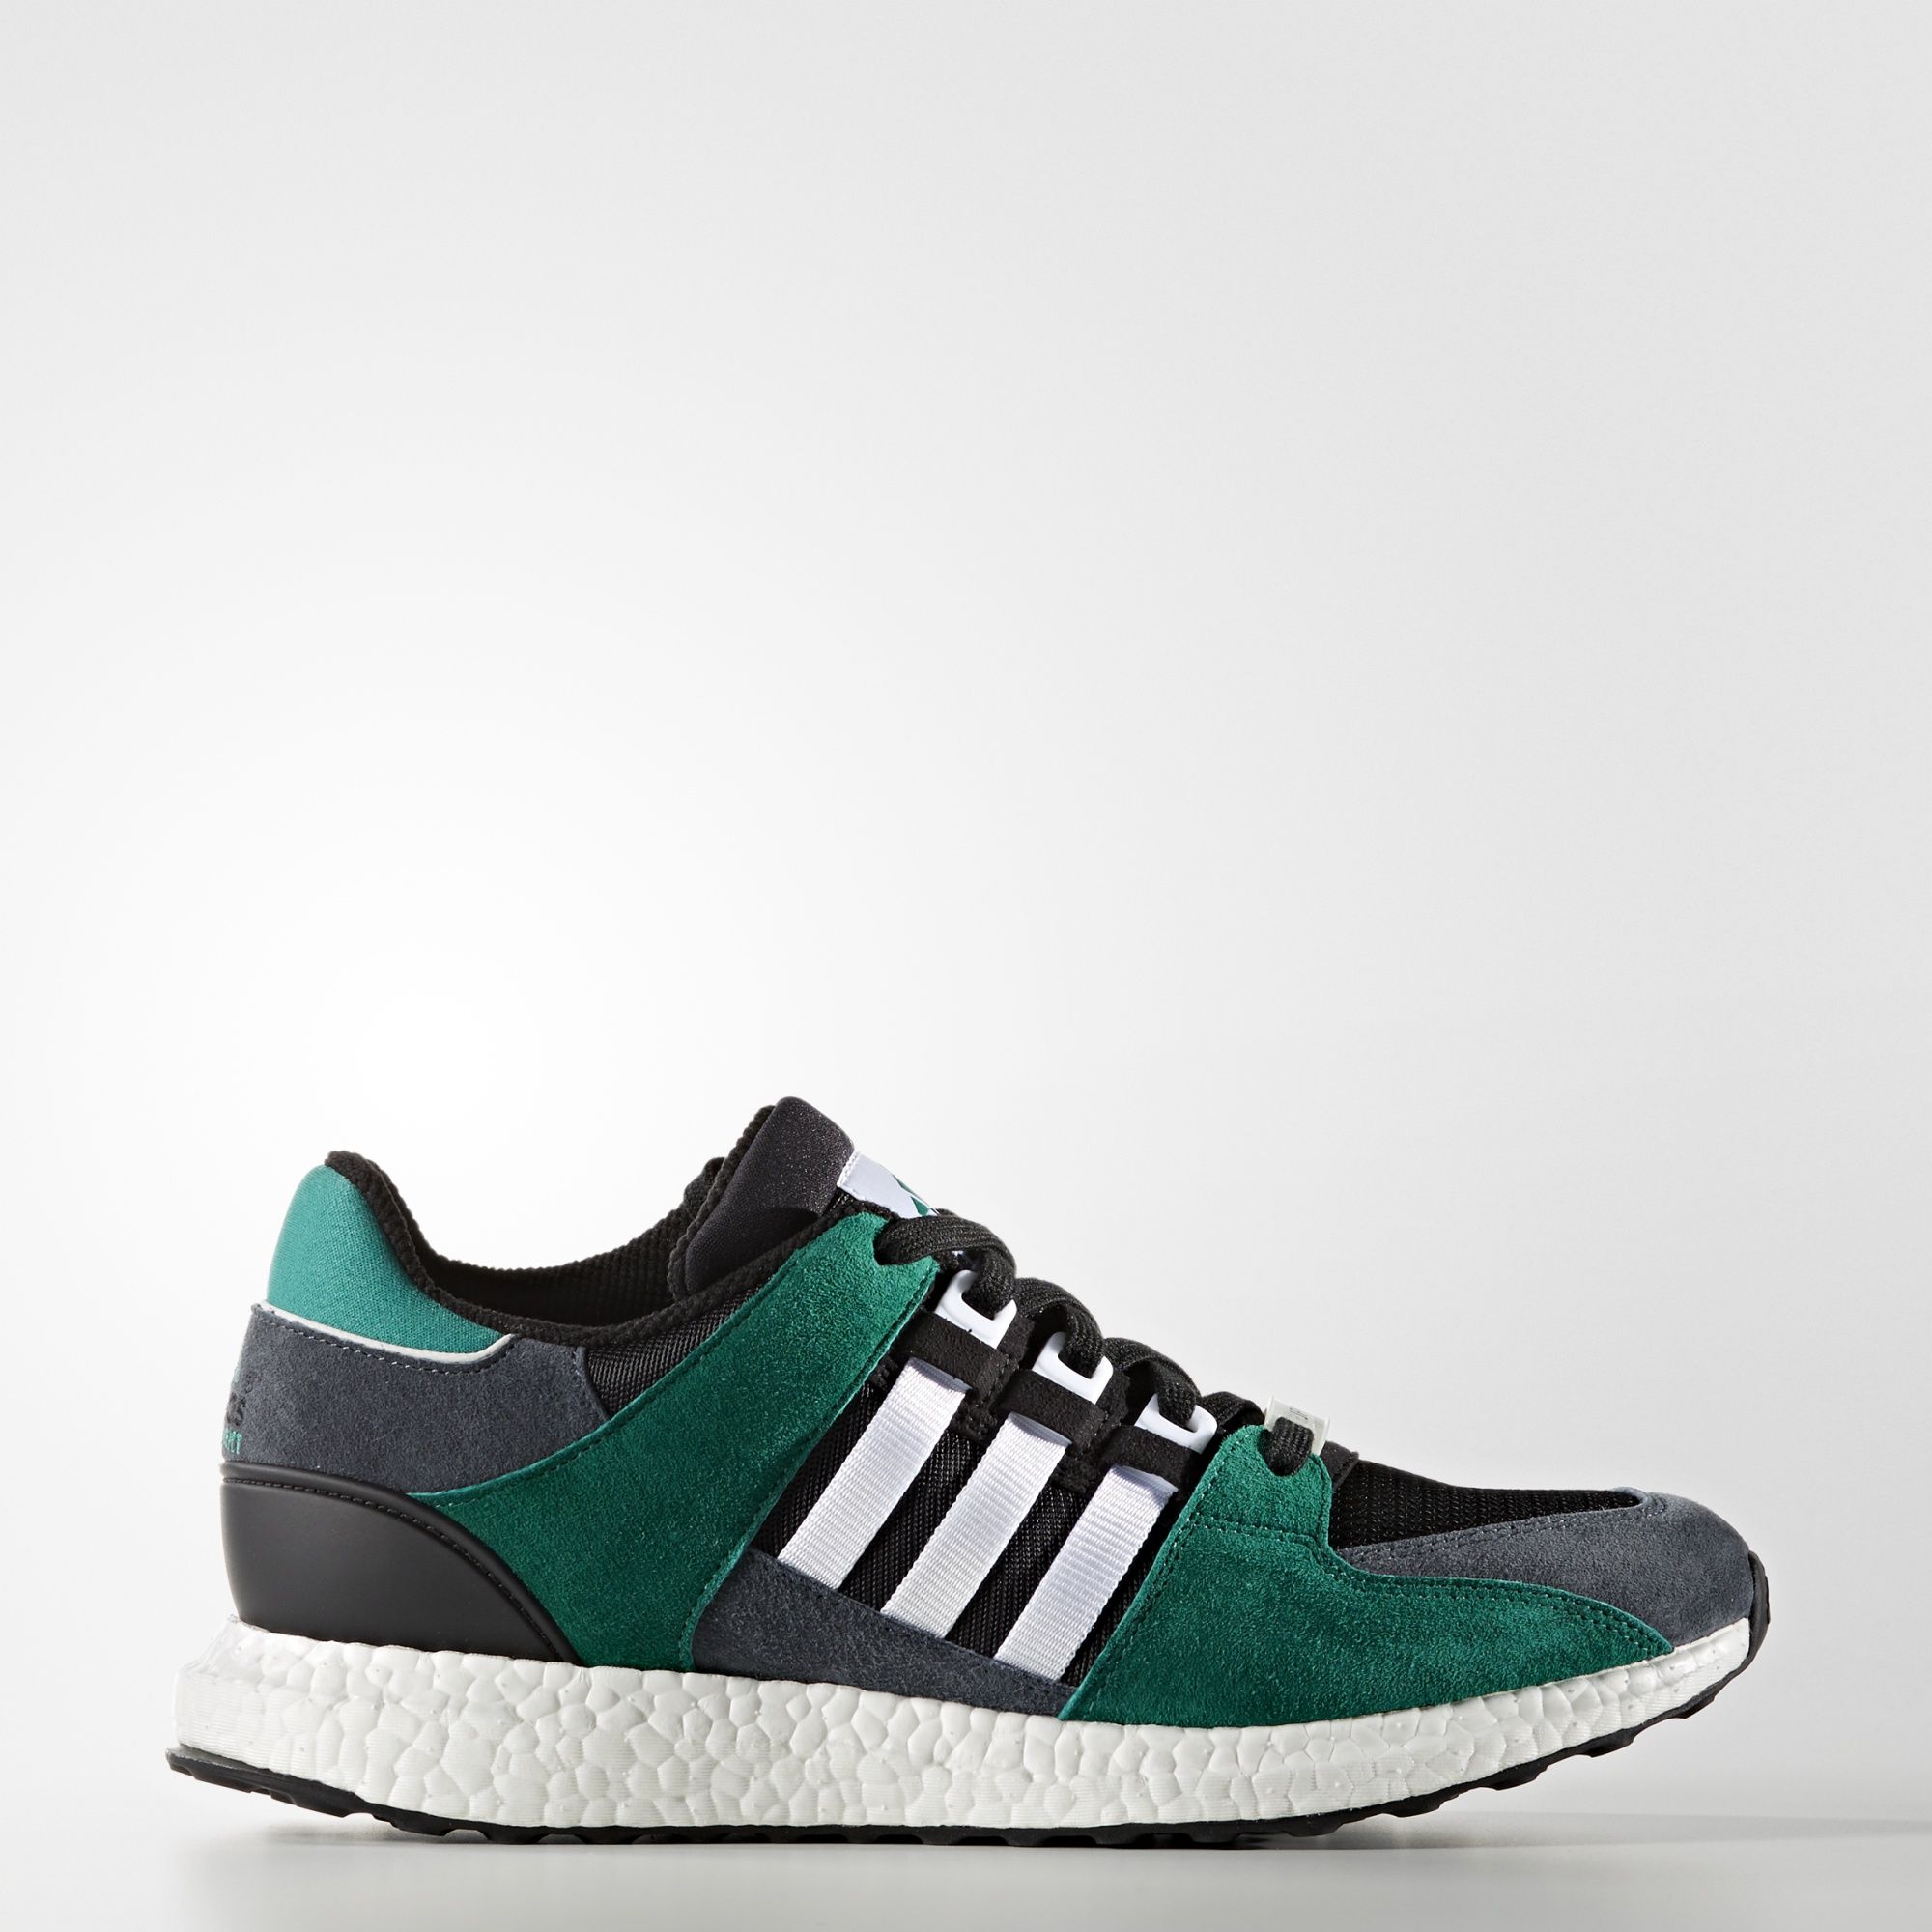 Adidas EQT Support 93/16
Core Black / White / Sub Green